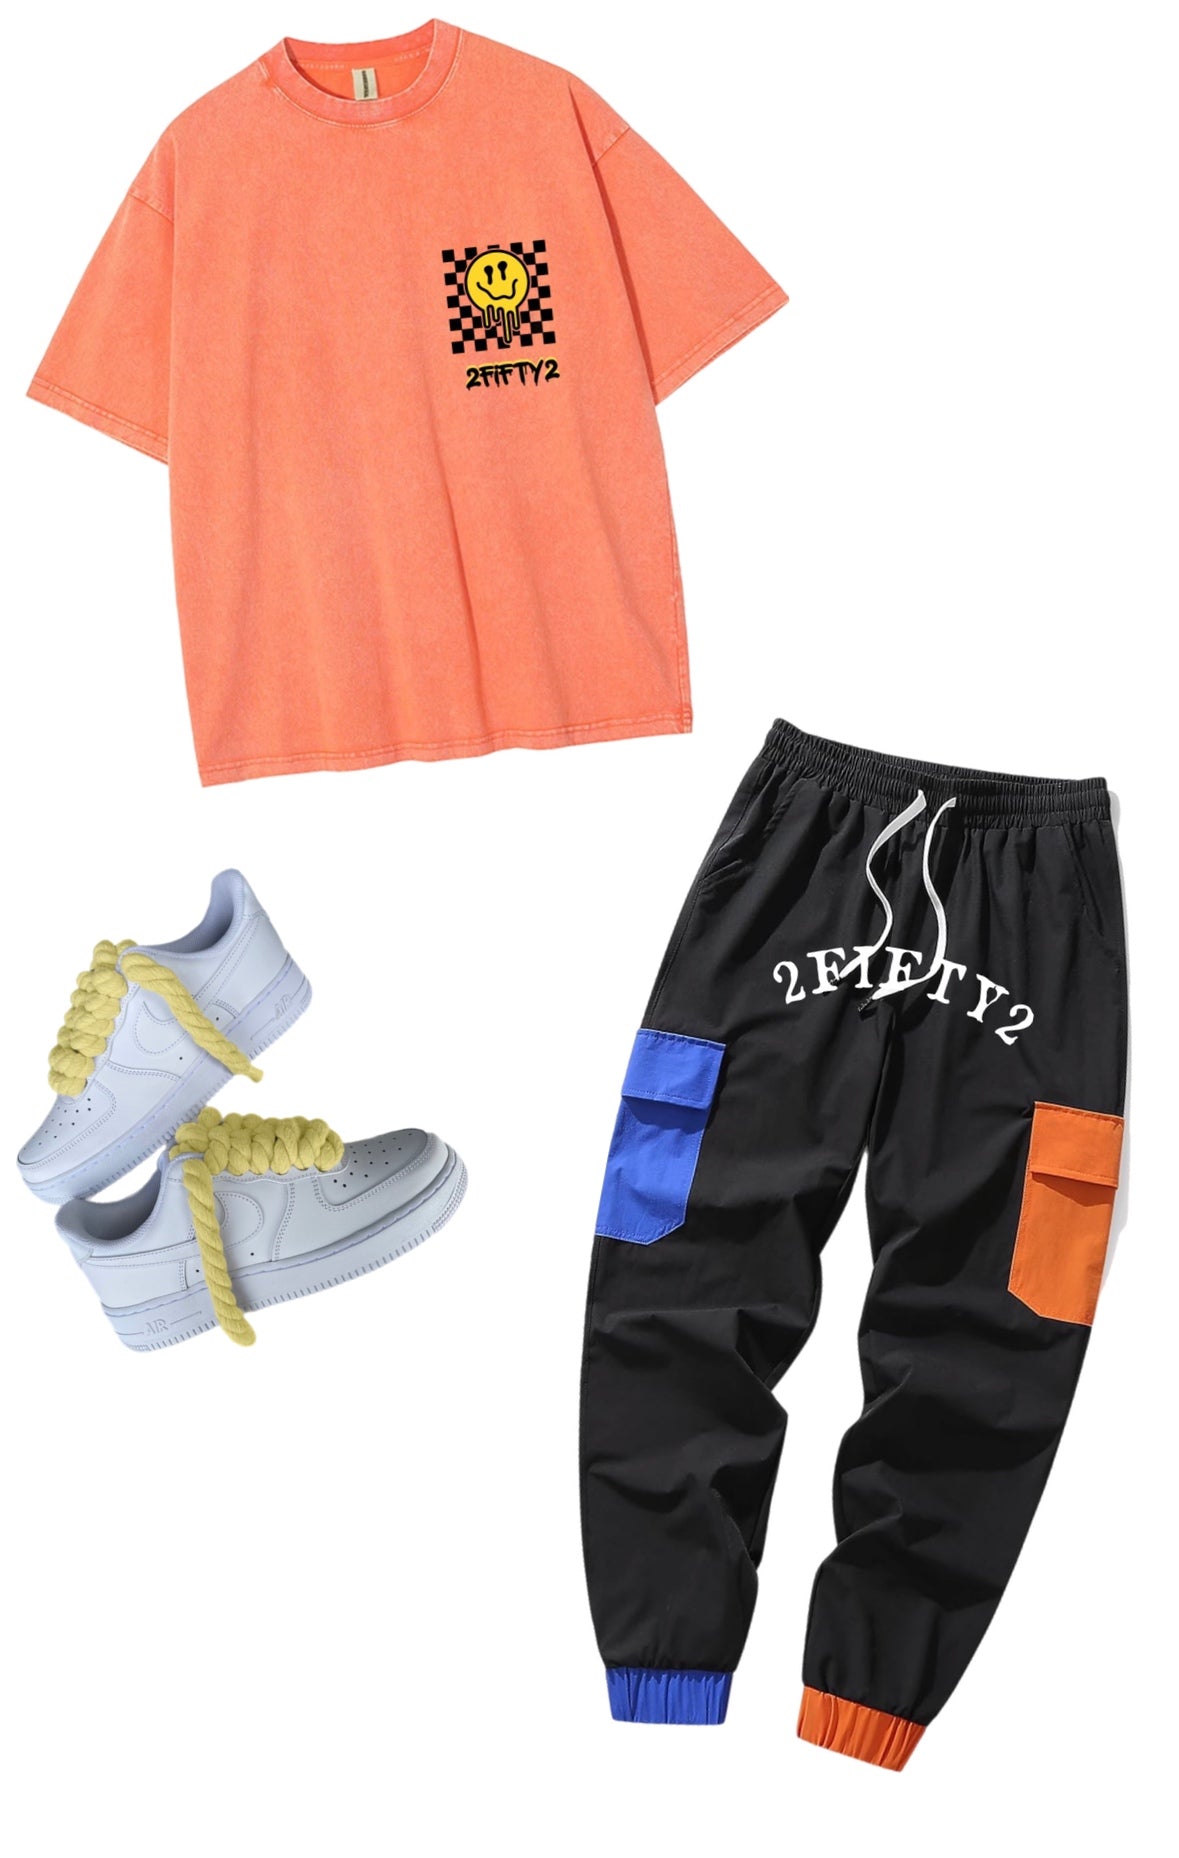 Men’s color block jogger sweatpants by 2fifty2